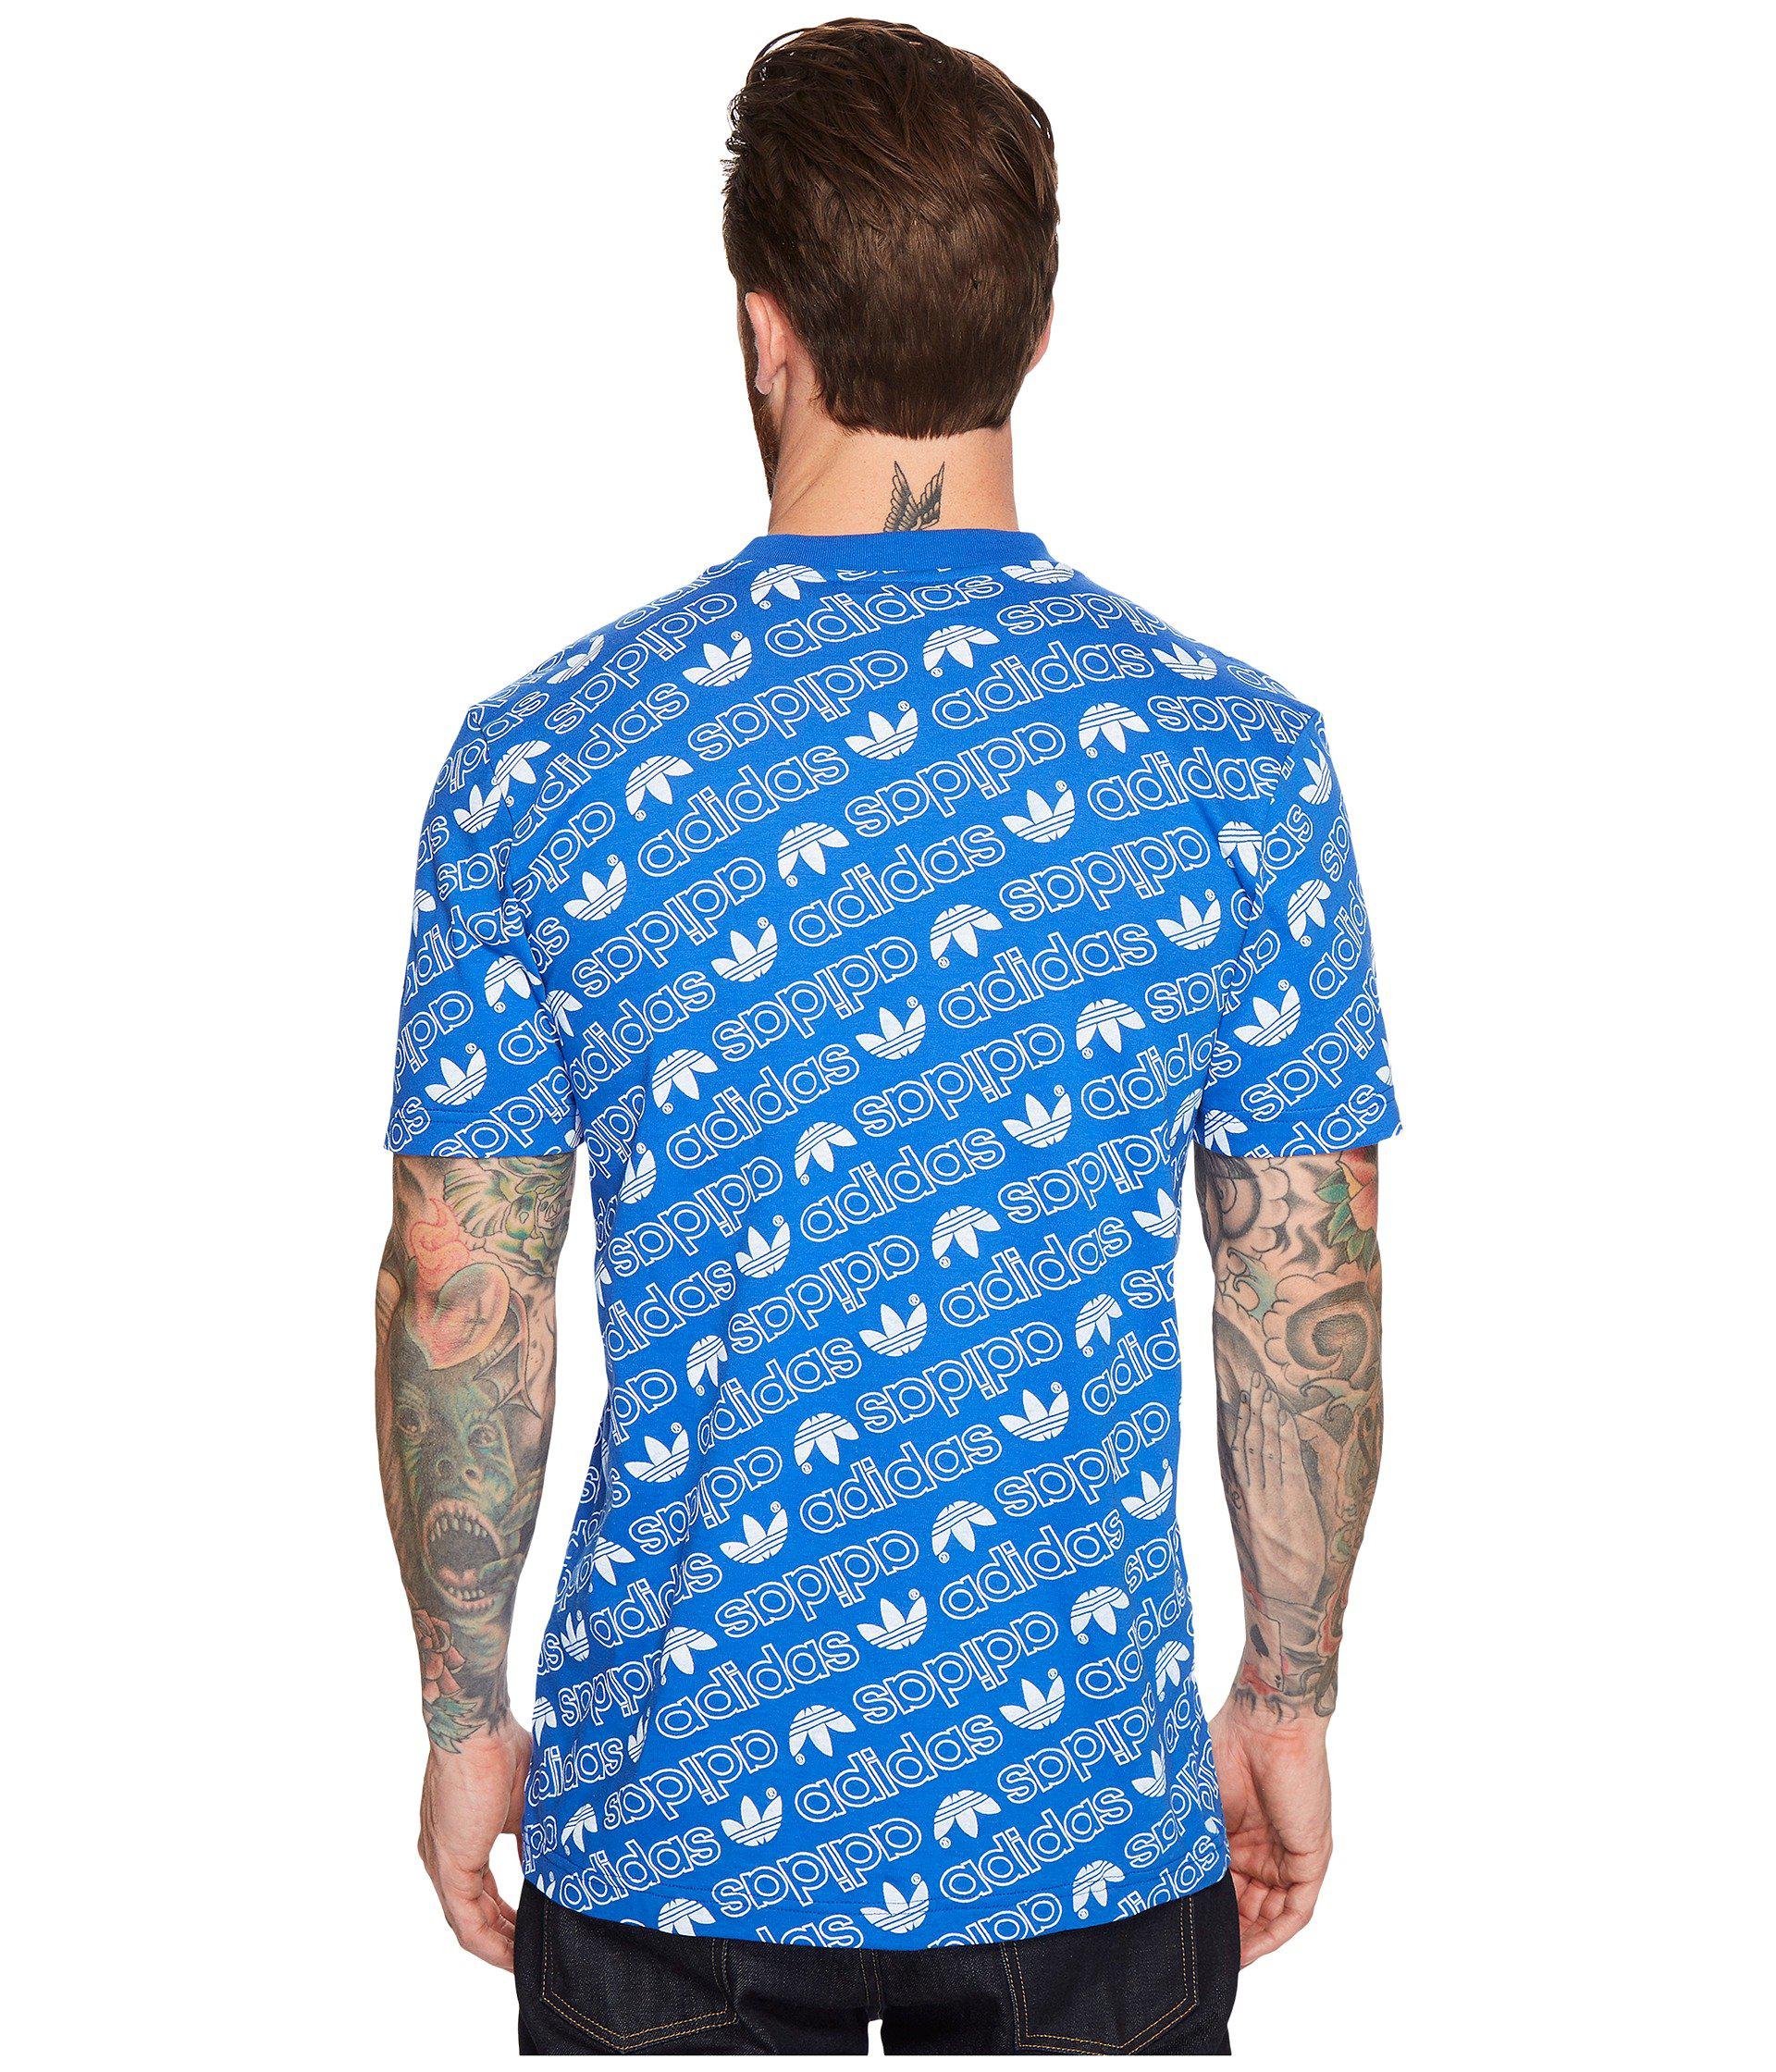 adidas Originals Cotton Aop T-shirt in Blue for Men - Lyst